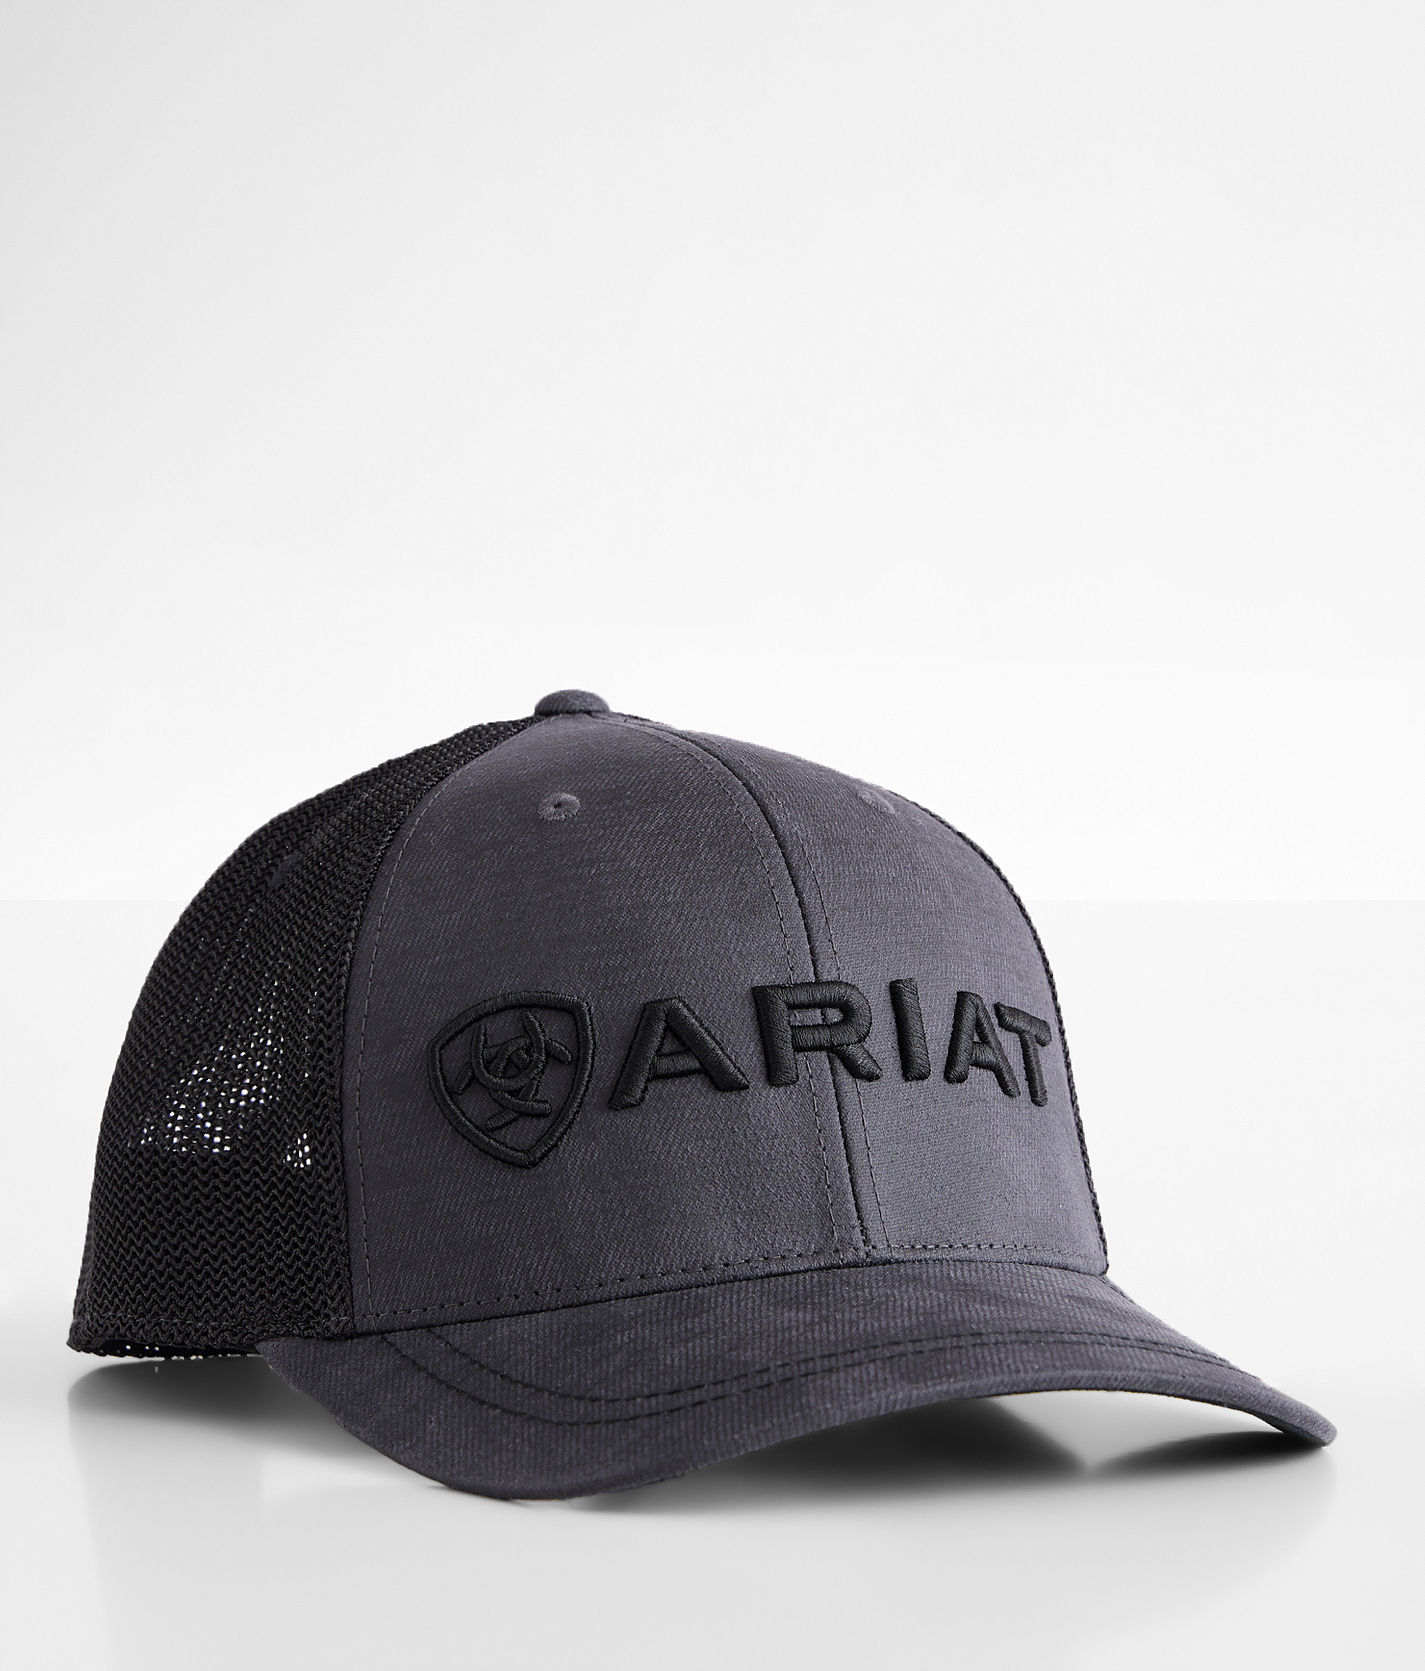 Ariat 110 Flexfit Trucker Hat - Black , Men's